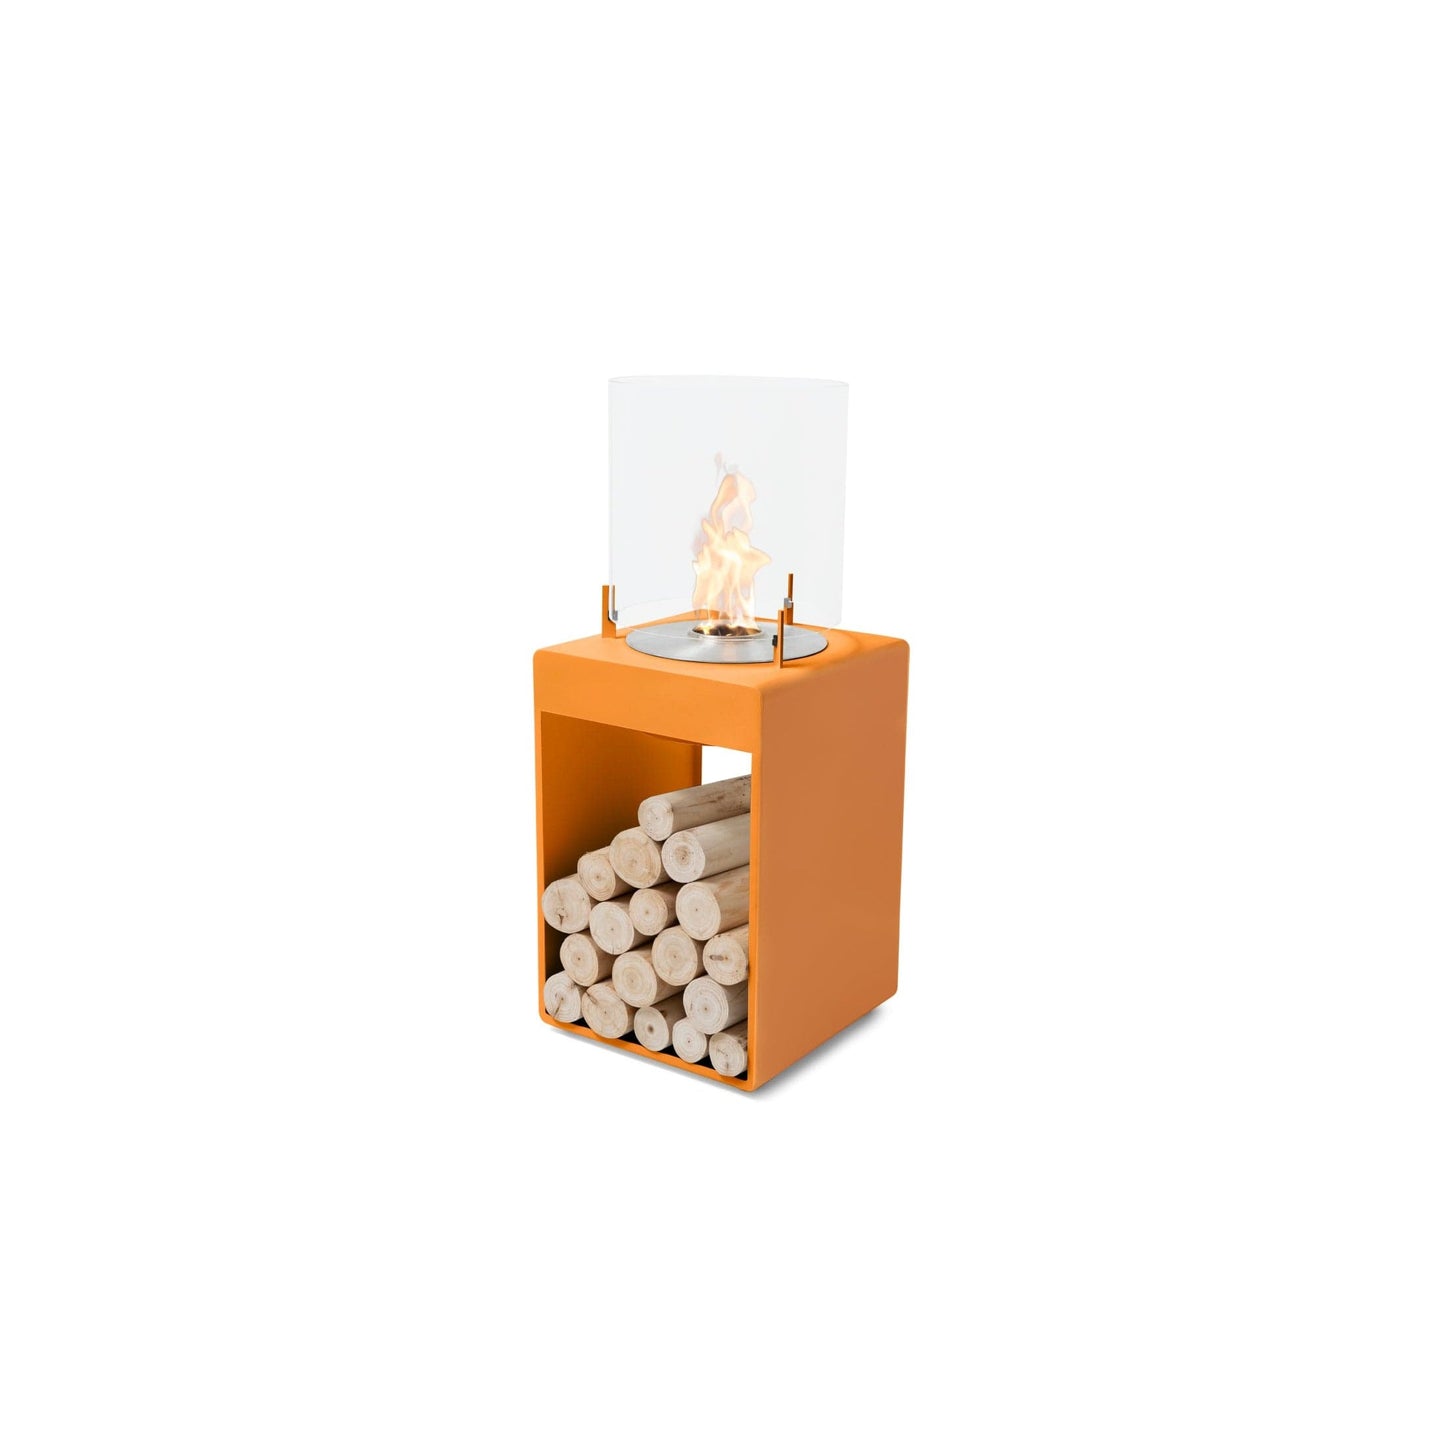 EcoSmart Fire POP 3T 33" Orange Freestanding Designer Fireplace with Stainless Steel Burner by MAD Design Group